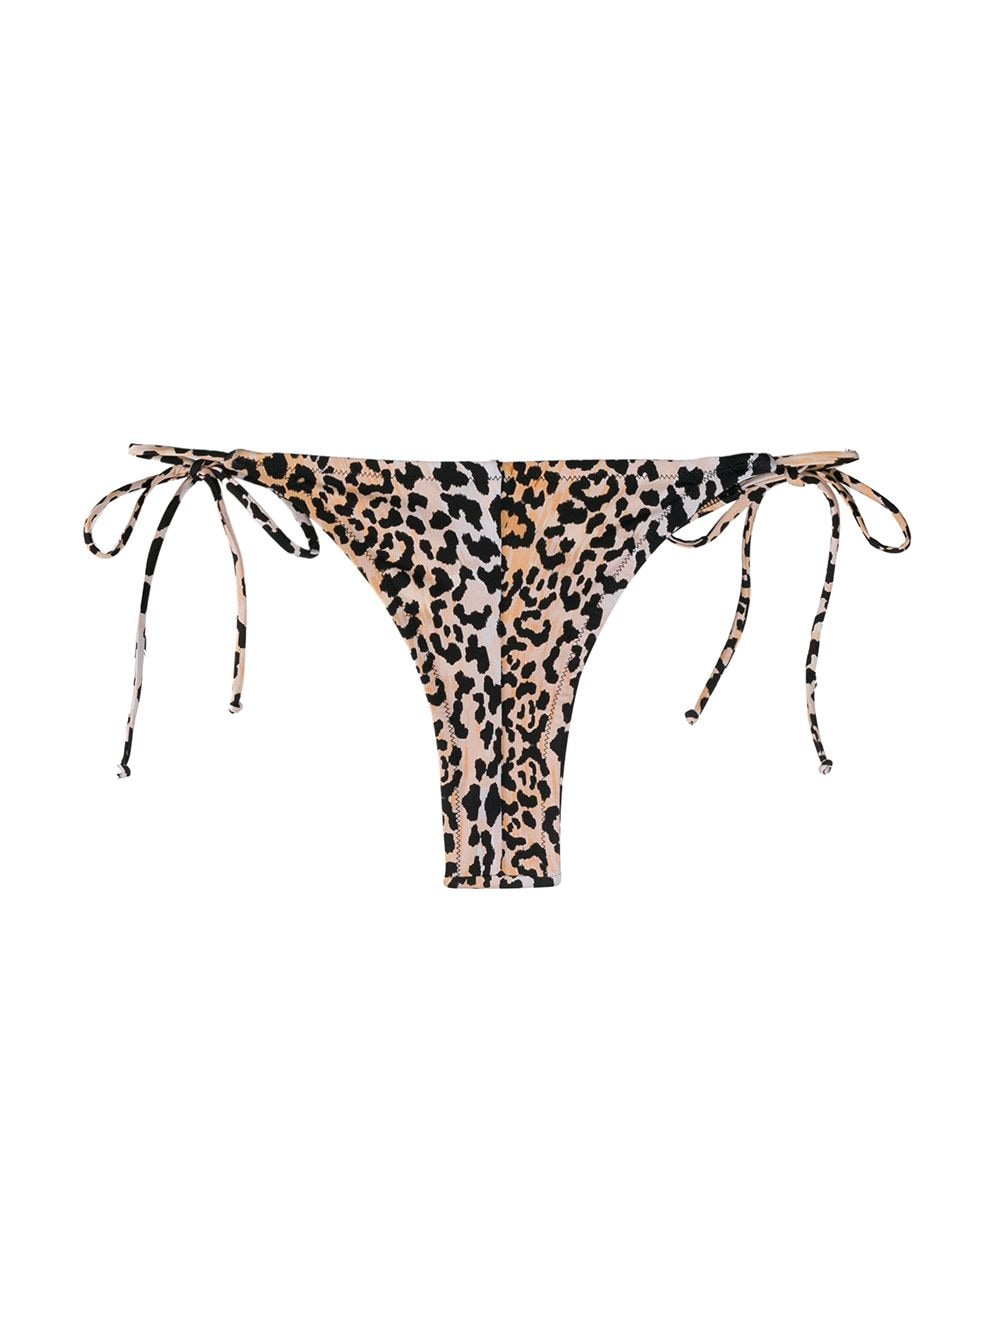 фото Reina olga плавки бикини с леопардовым принтом